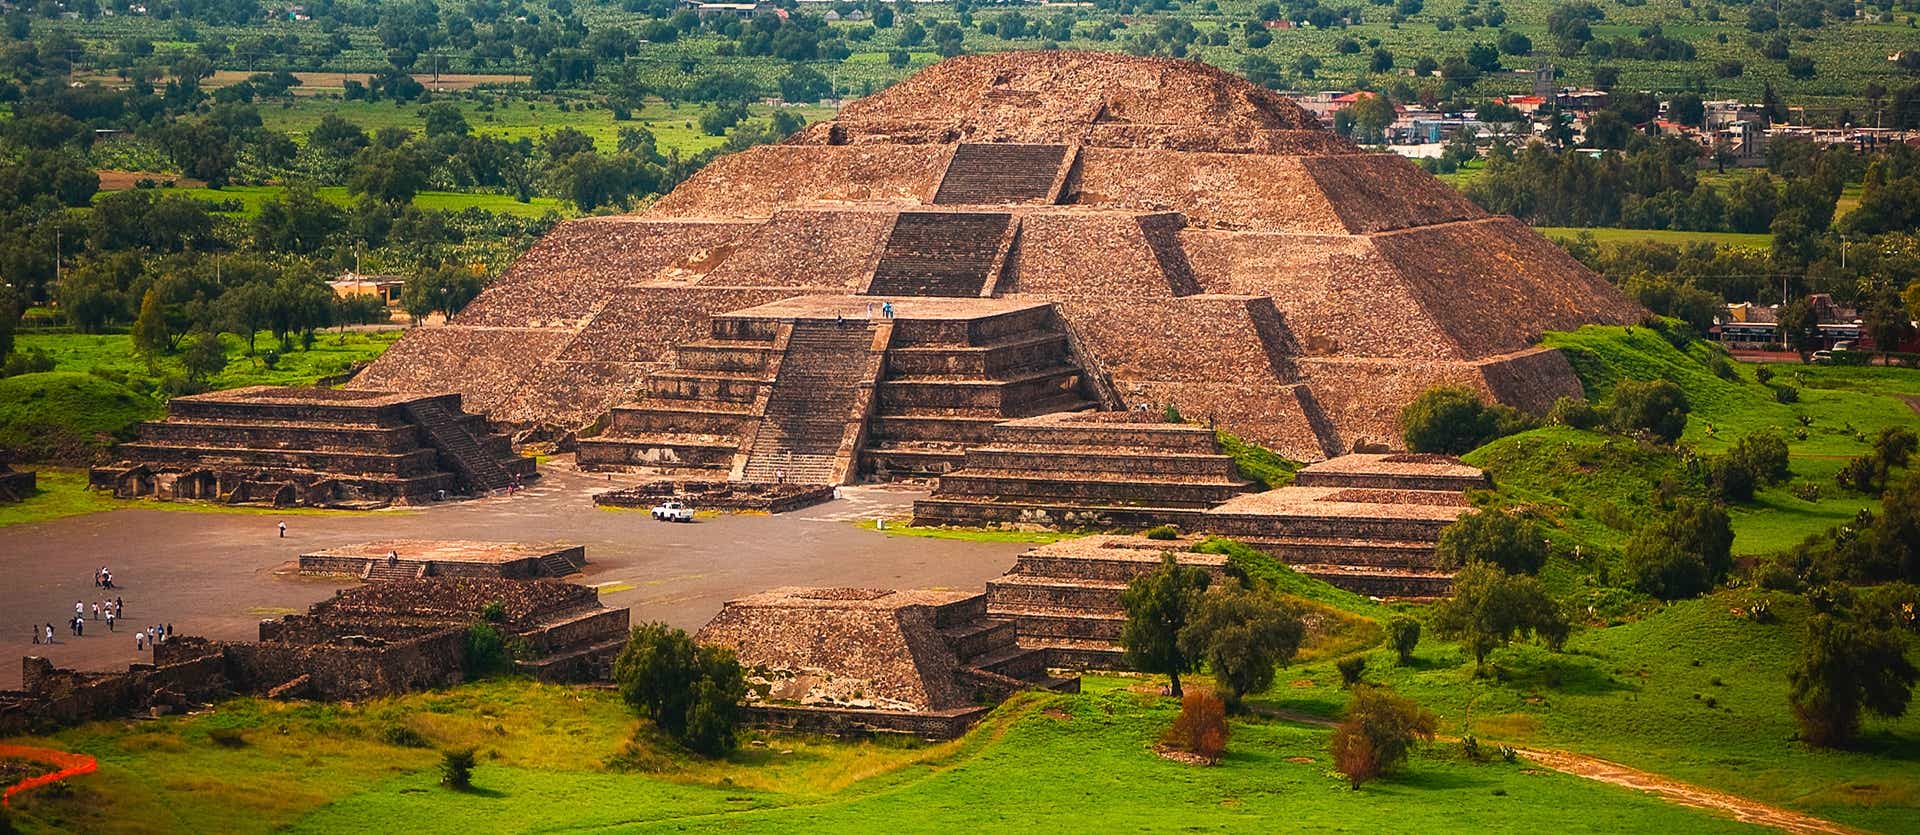 <span class="iconos separador"></span> Complejo arqueológico de Teotihuacán <span class="iconos separador"></span>